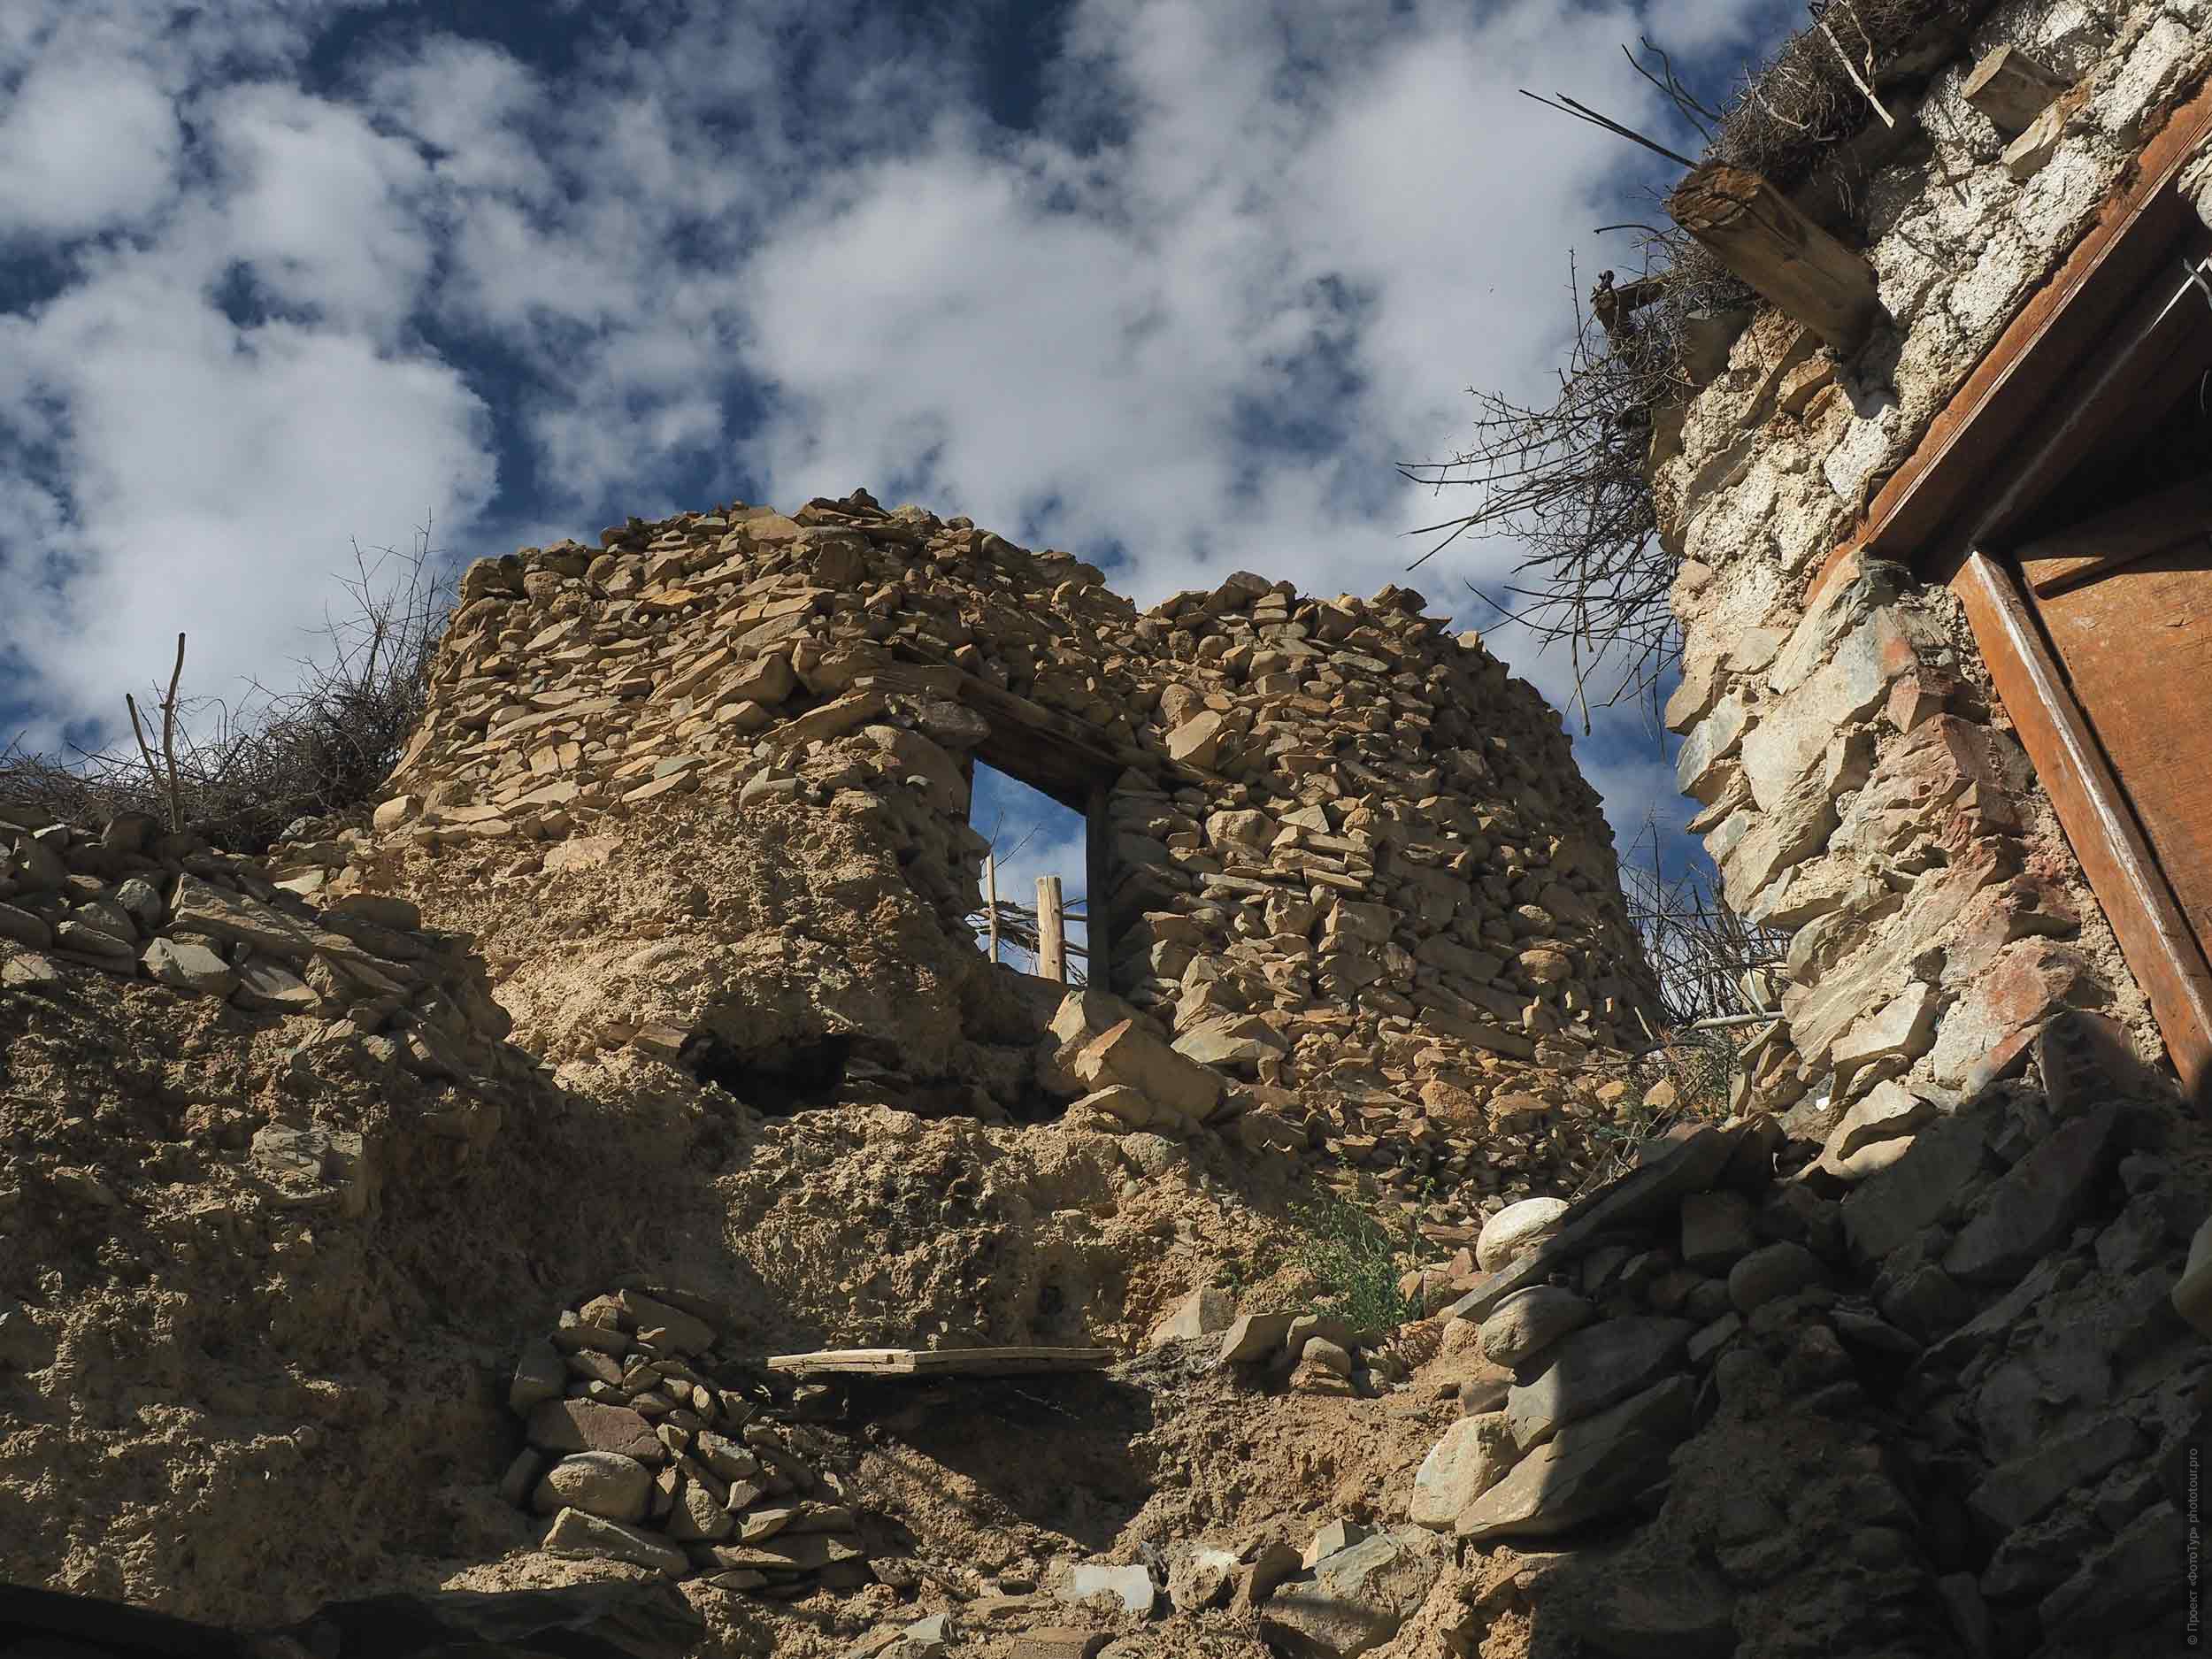 Ruins of an old house in the village of Domkar, Ladakh women’s tour, August 31 - September 14, 2019.